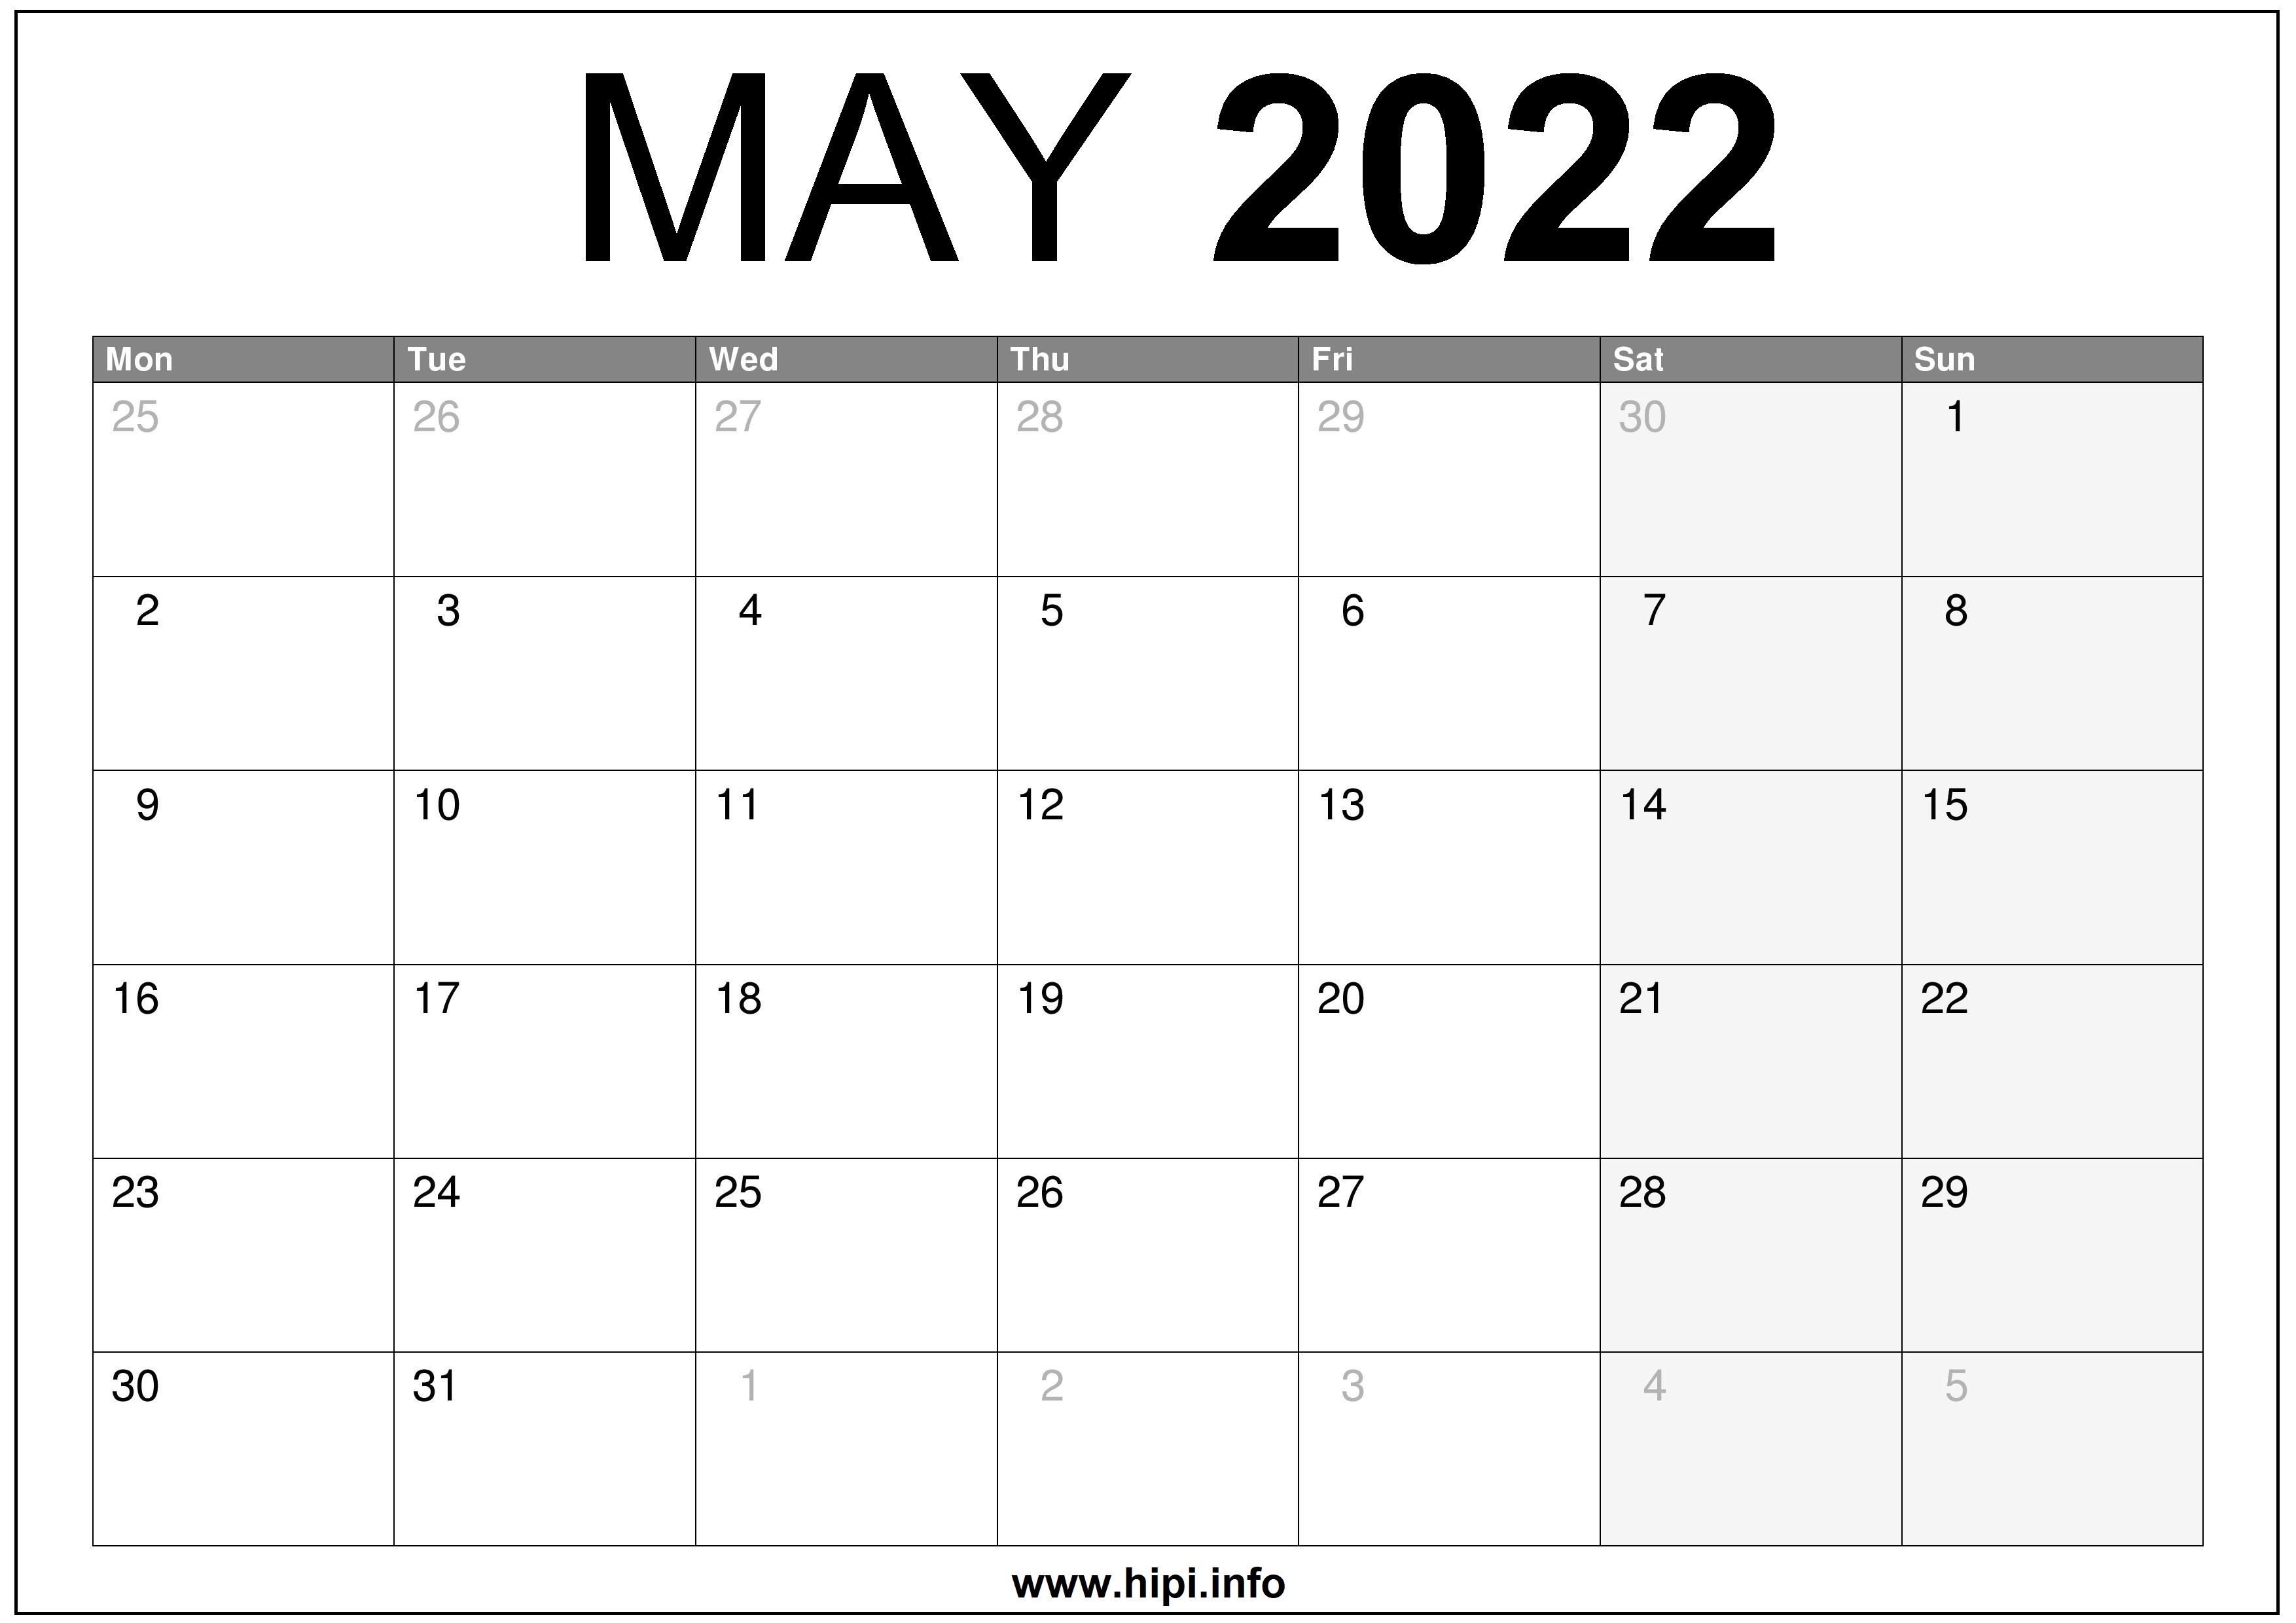 May 2022 UK Calendar Printable Free Hipi.info